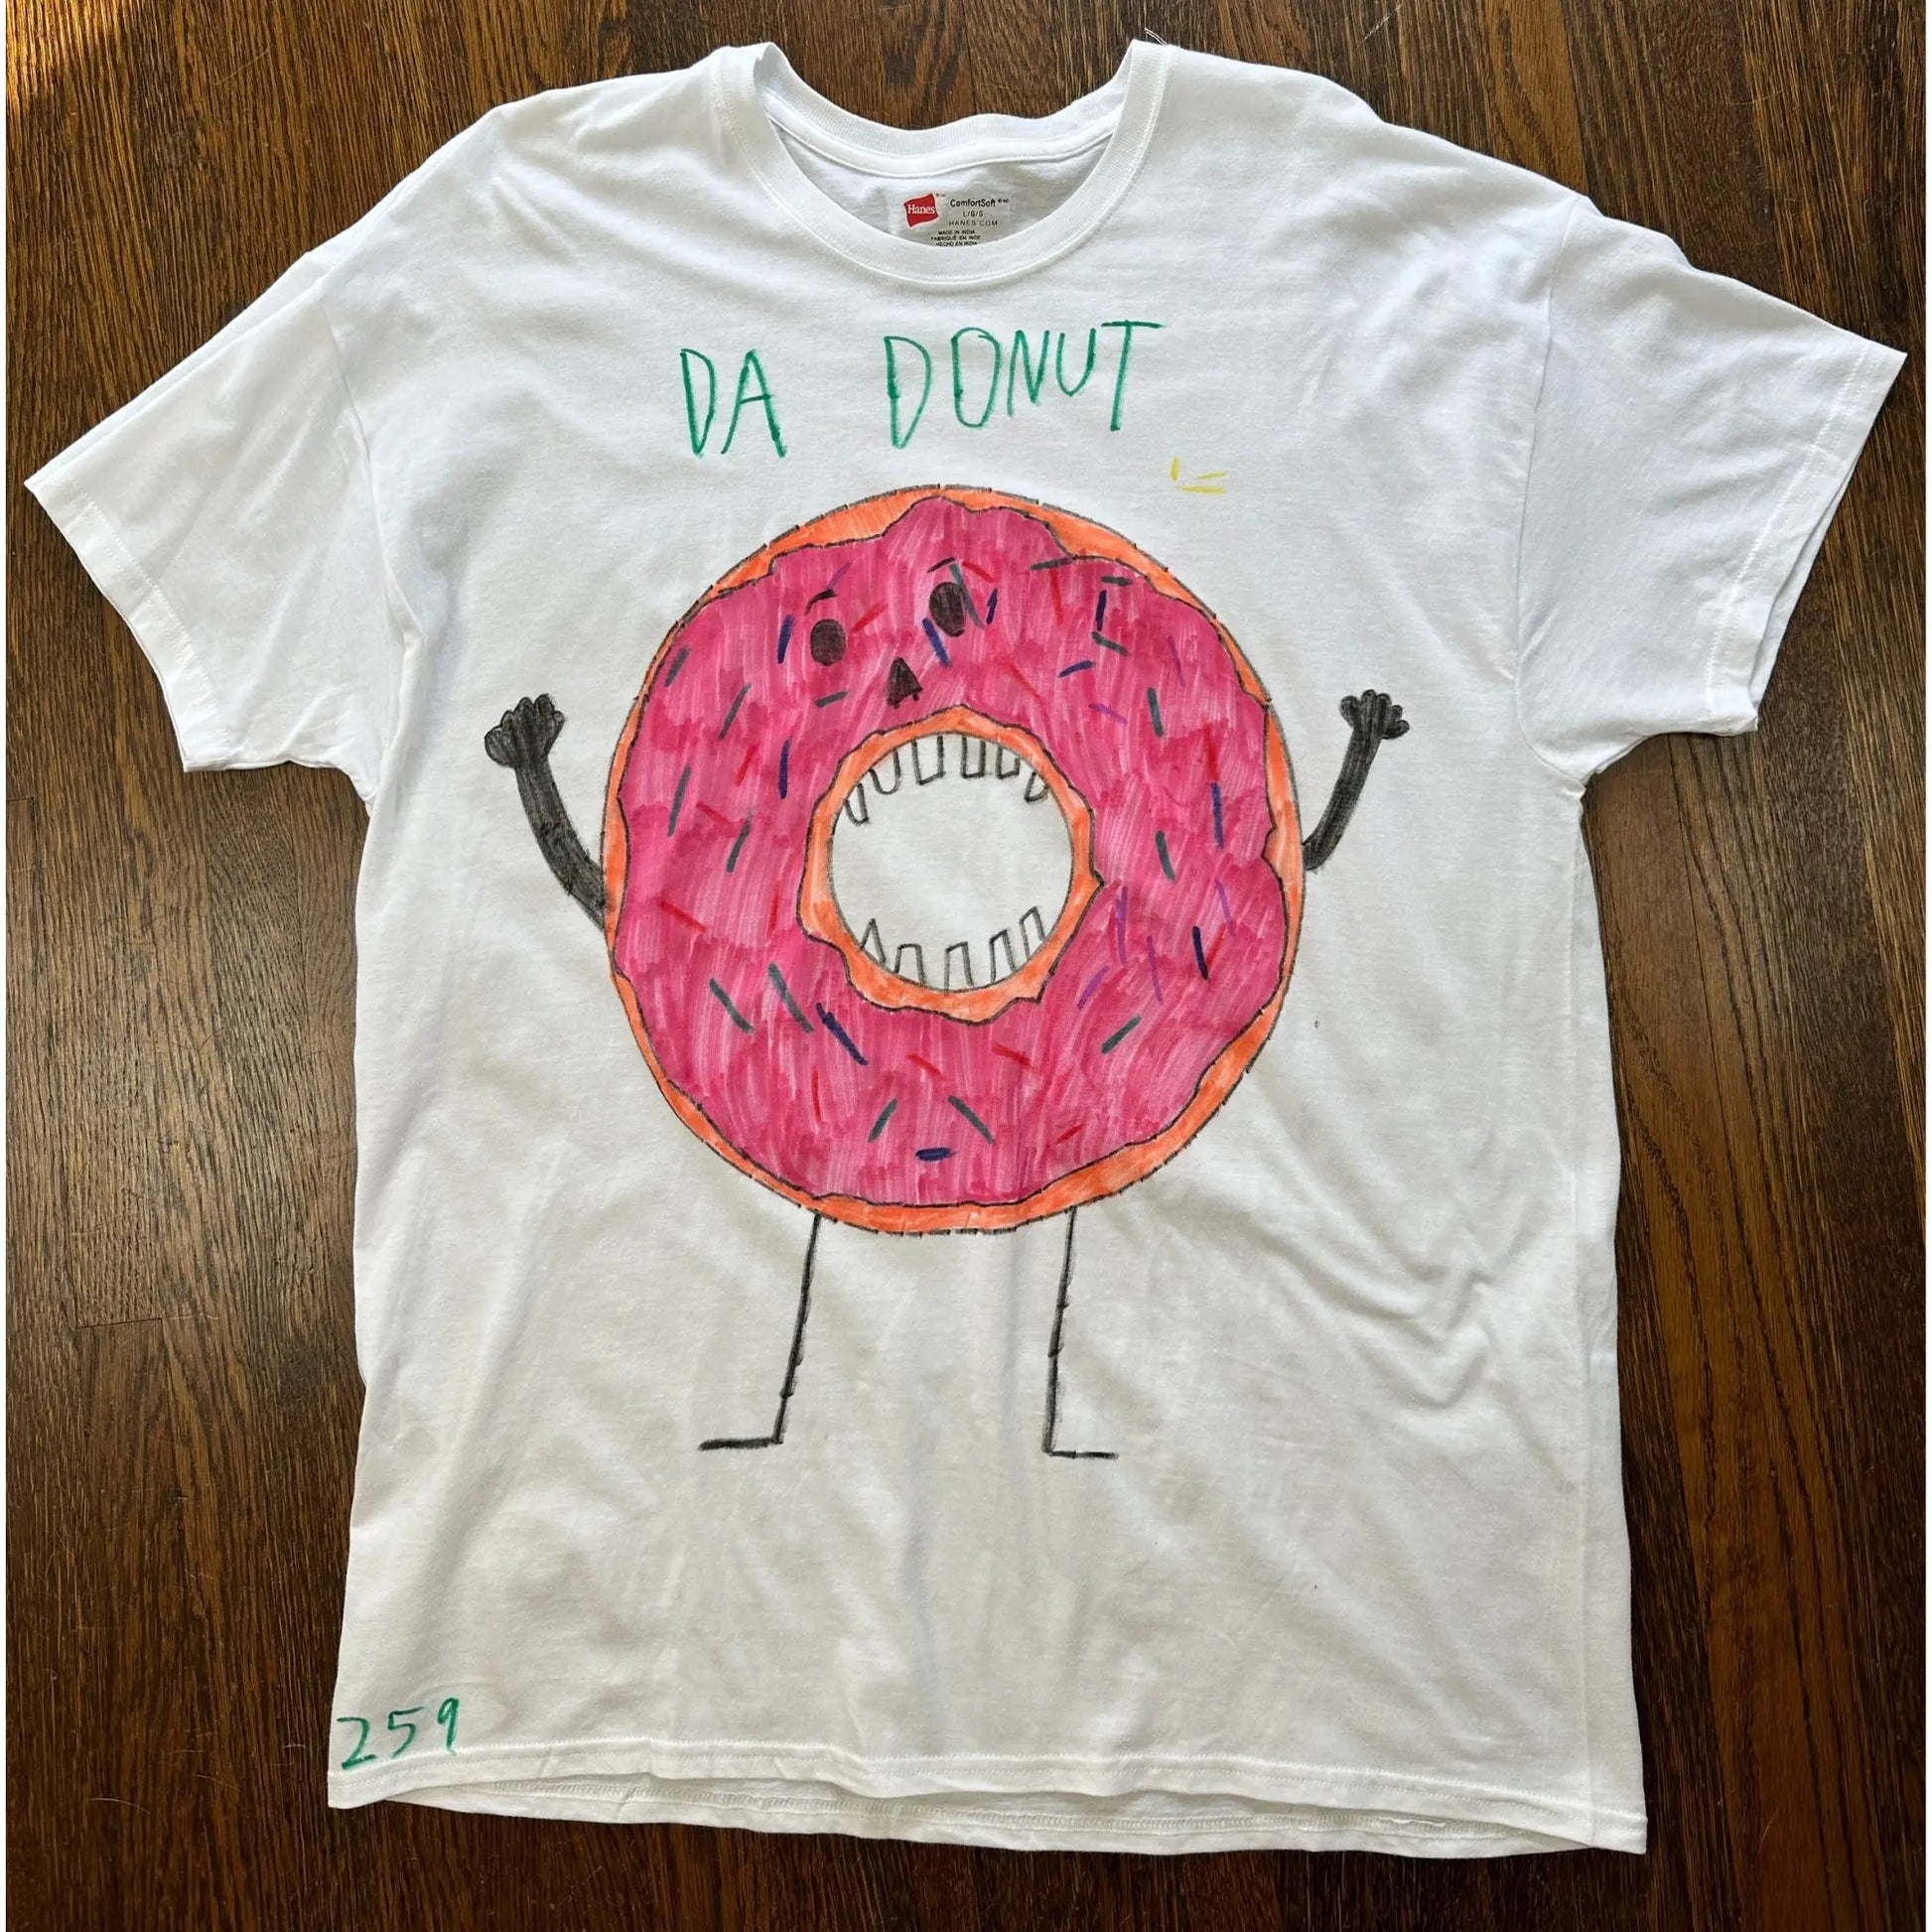 Buy Dylan's T-Shirt Club Da Donut T-Shirt - White | T-Shirtss at Woven Durham